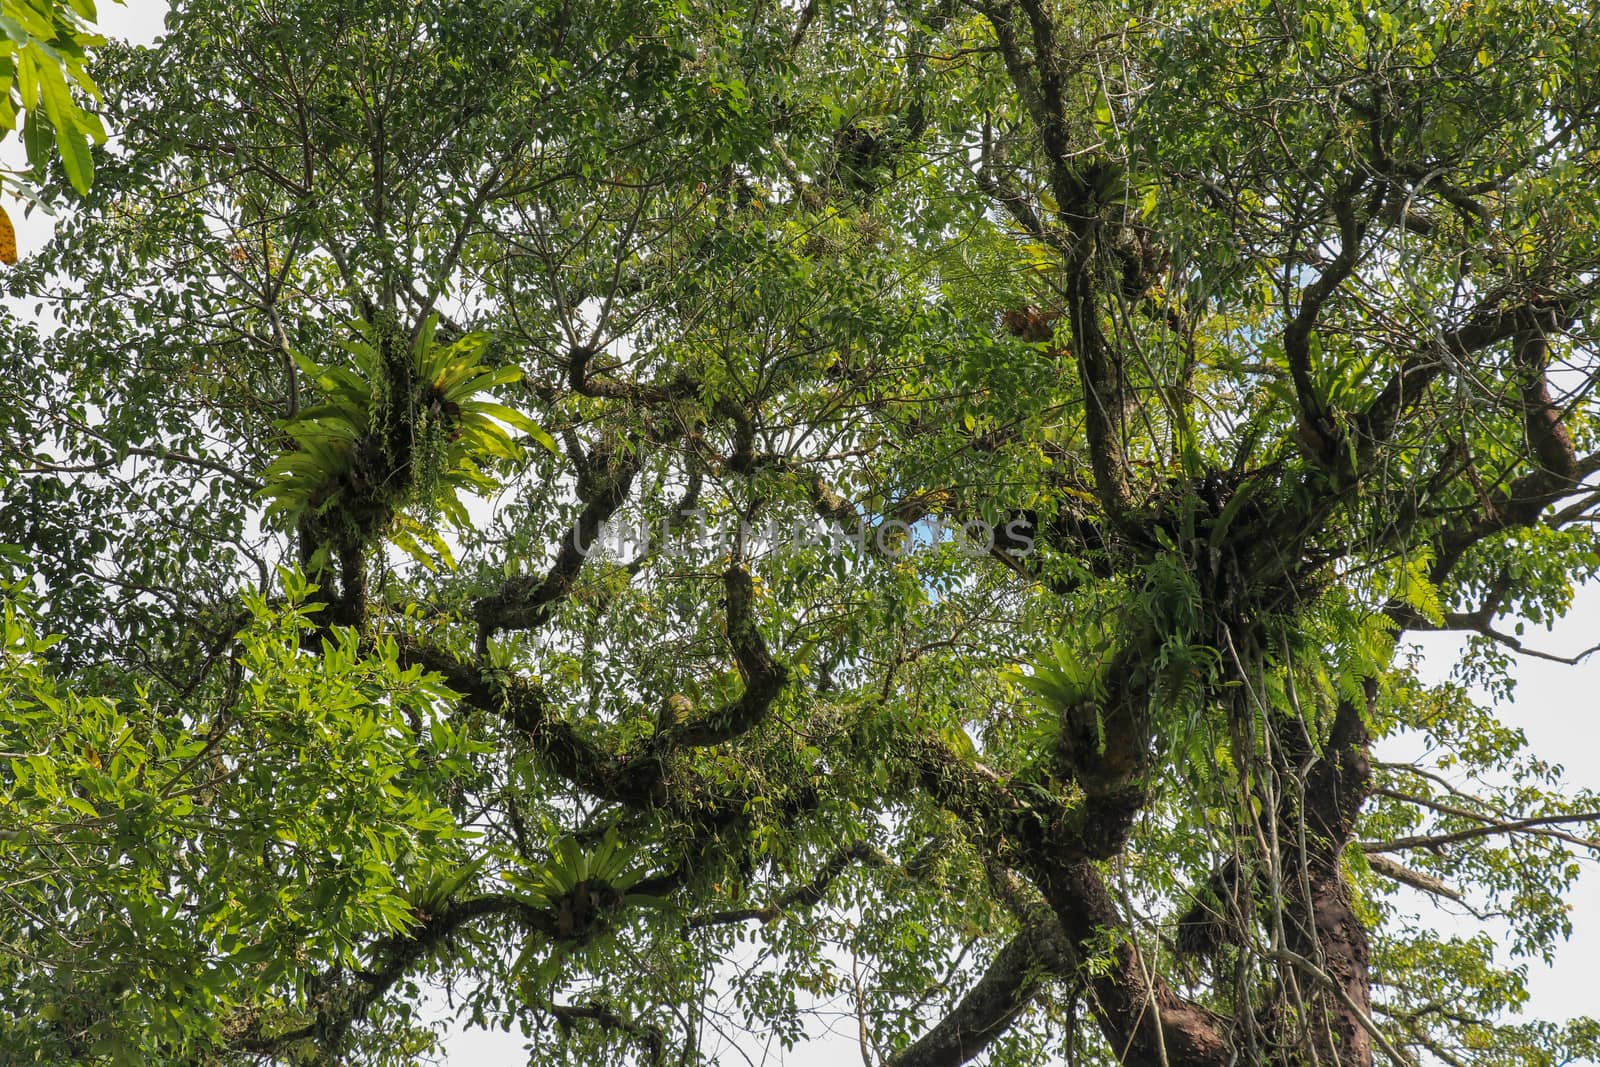 Asplenium Nidus parasites on branches in the crown of a huge tropical tree. Green leaves of Asplenium nidus. Bird's Nest Fern is an epiphytic species of fern in the family Aspleniaceae.